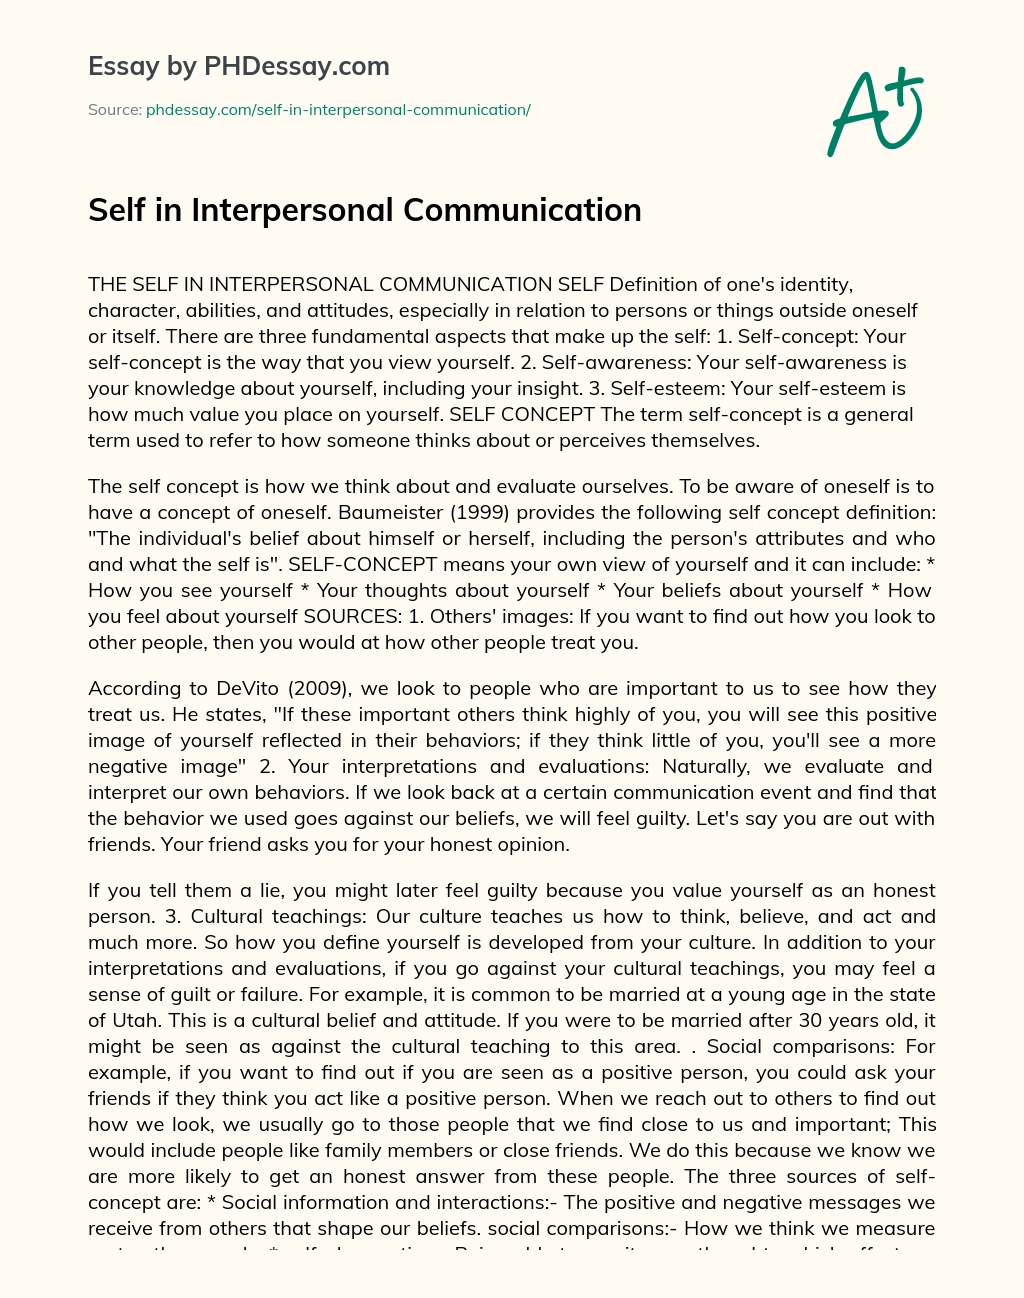 Self in Interpersonal Communication essay